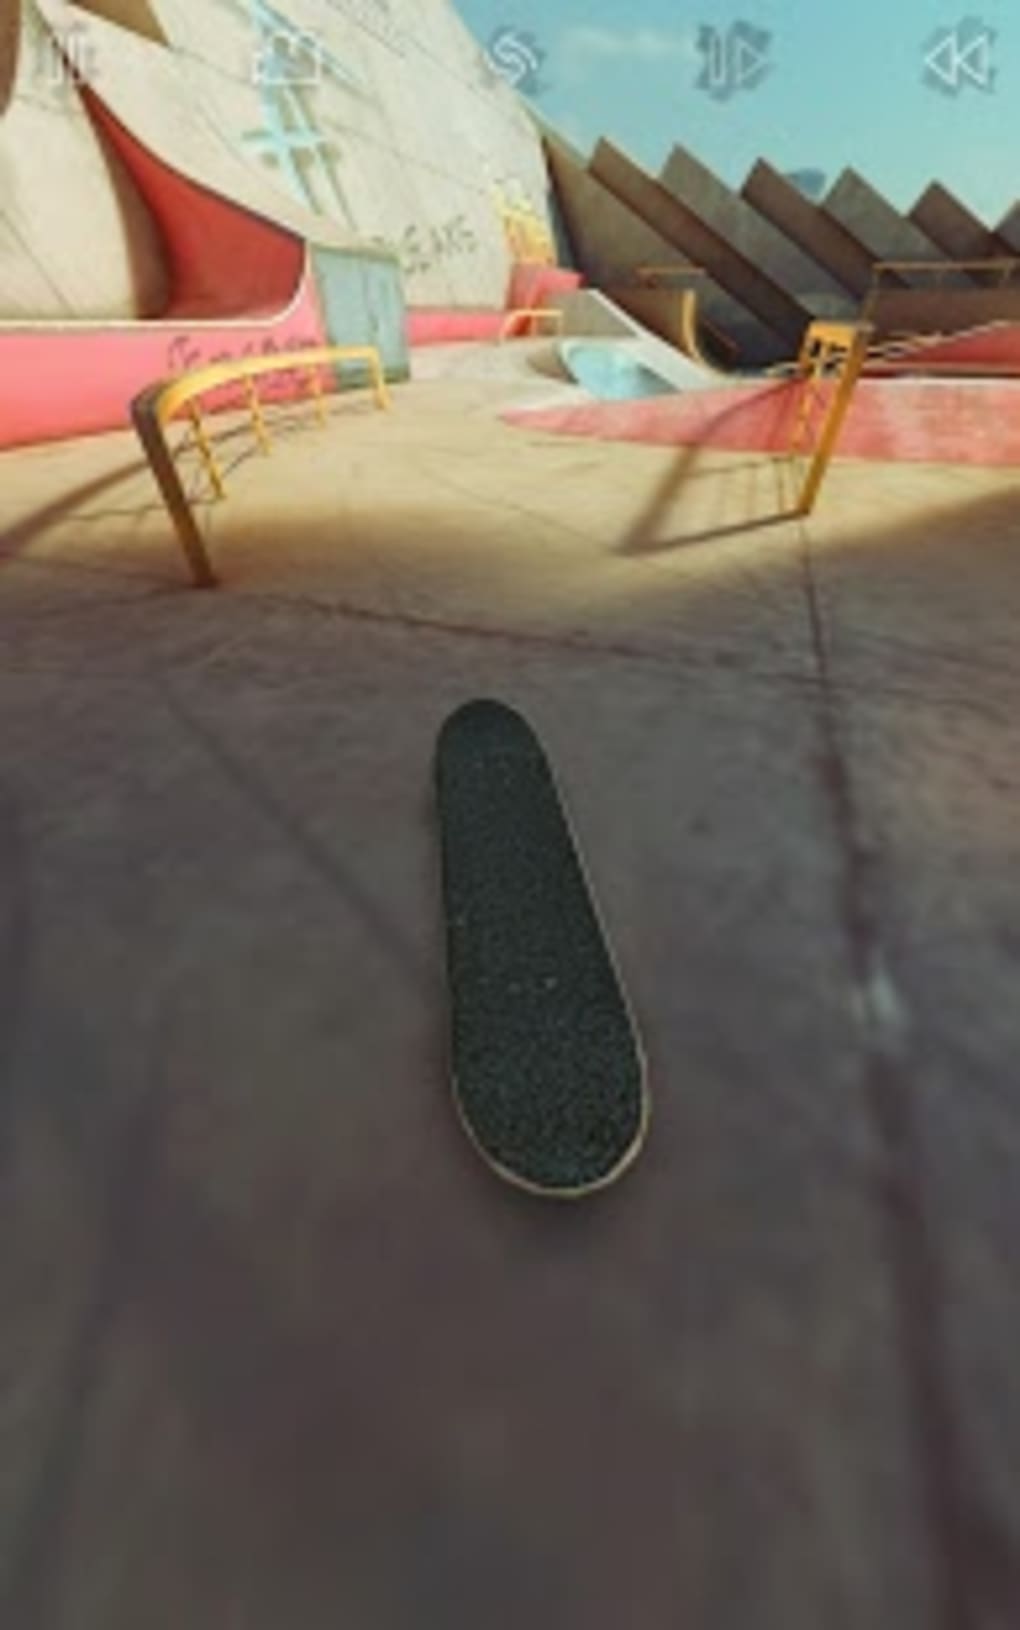 True Skate - Apps on Google Play